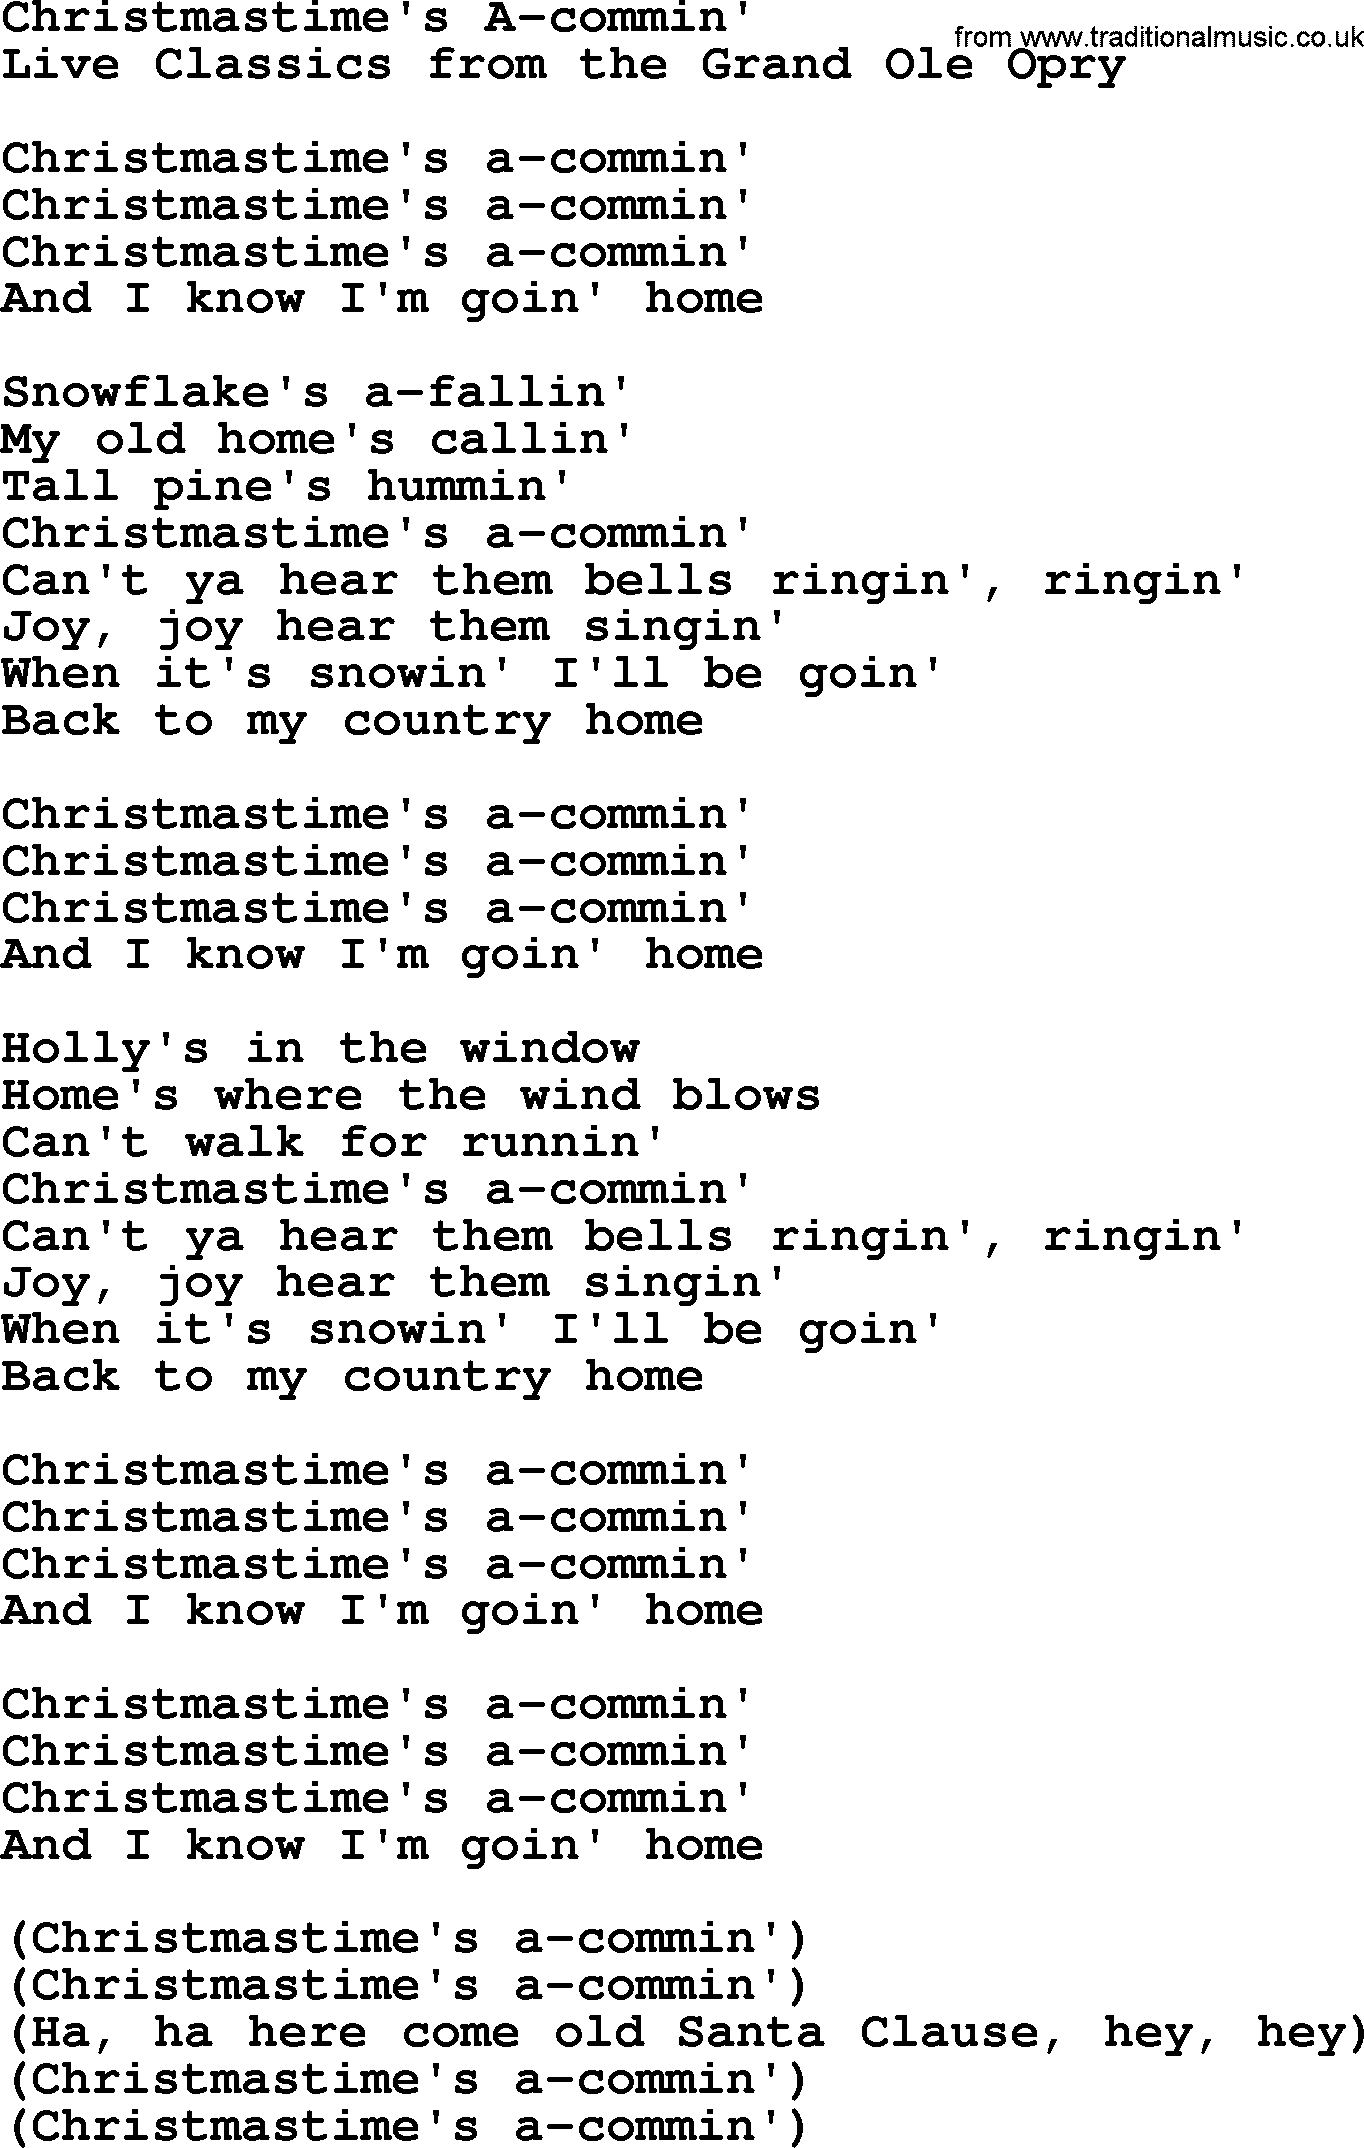 Marty Robbins song: Christmastimes Acommin, lyrics